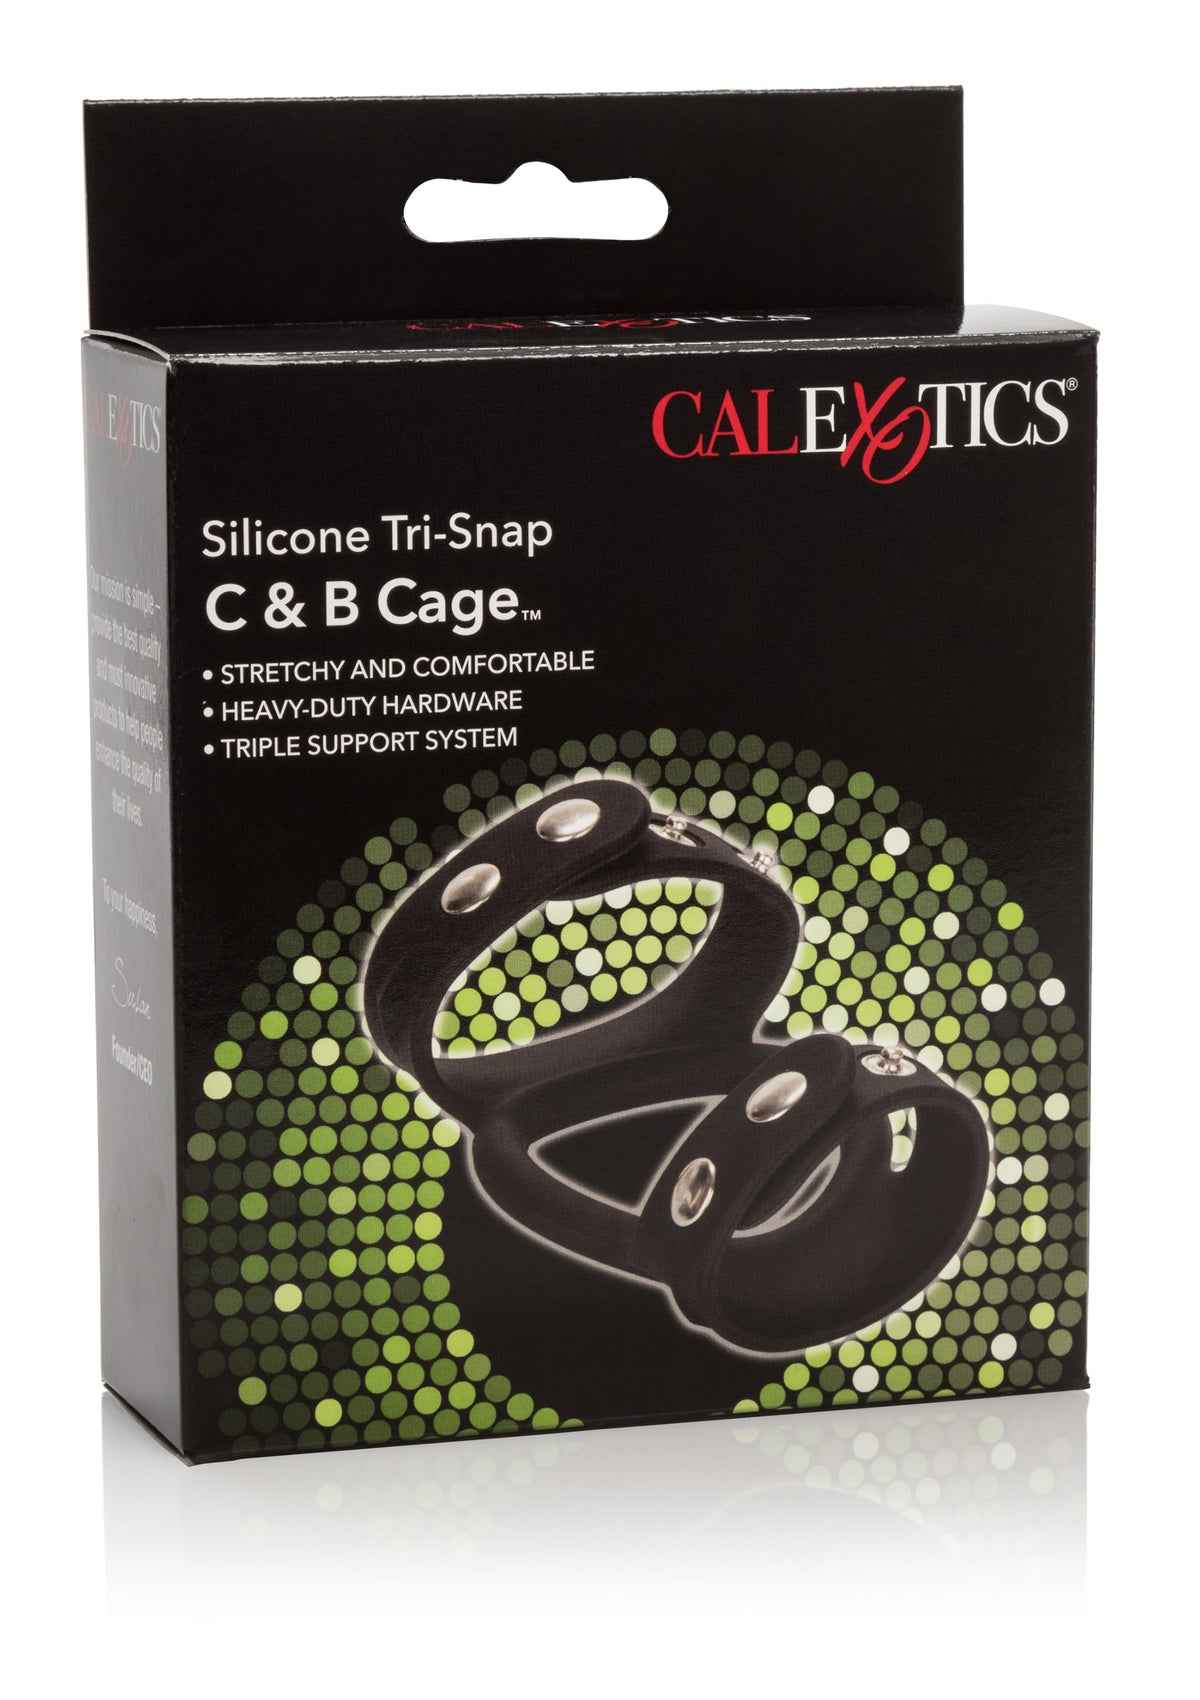 Silicone Tri-Snap C & B Cage